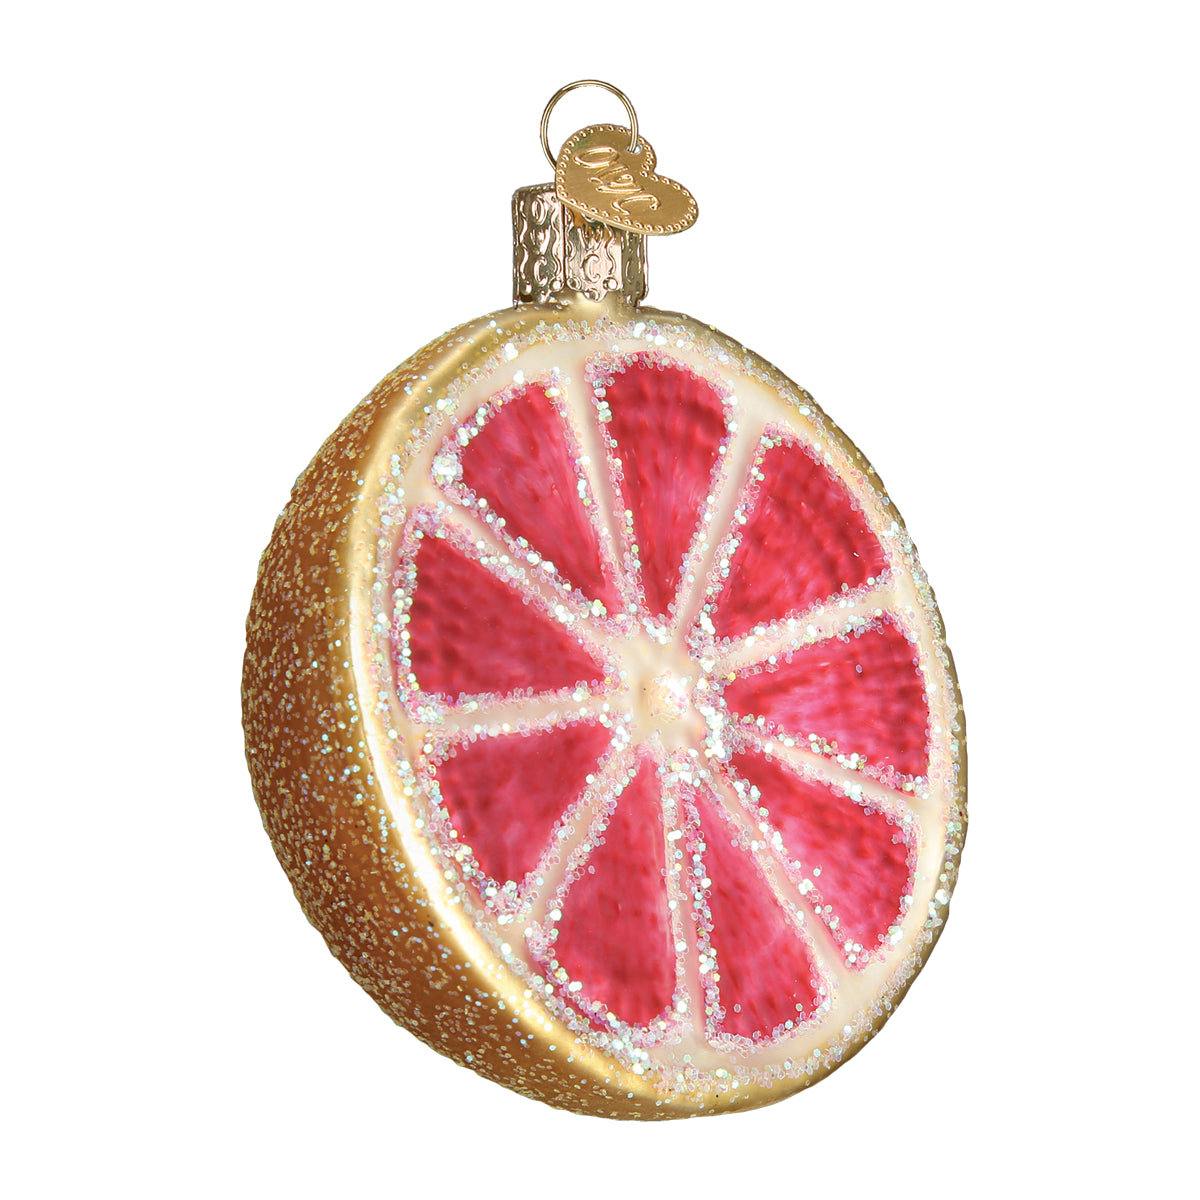 Grapefruit Ornament